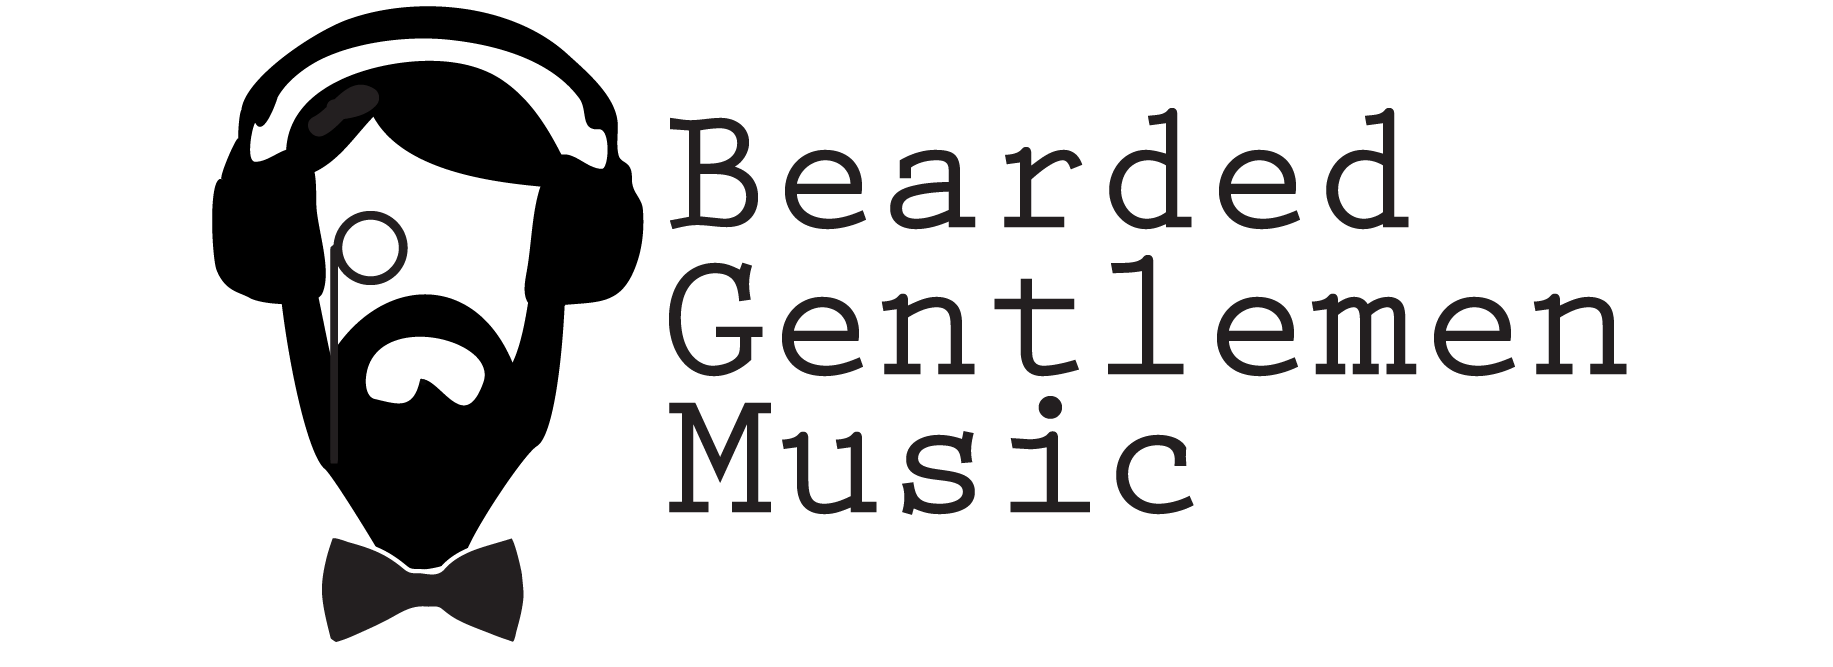 Guilty Pleasure: Katy Perry - Bearded Gentlemen Music